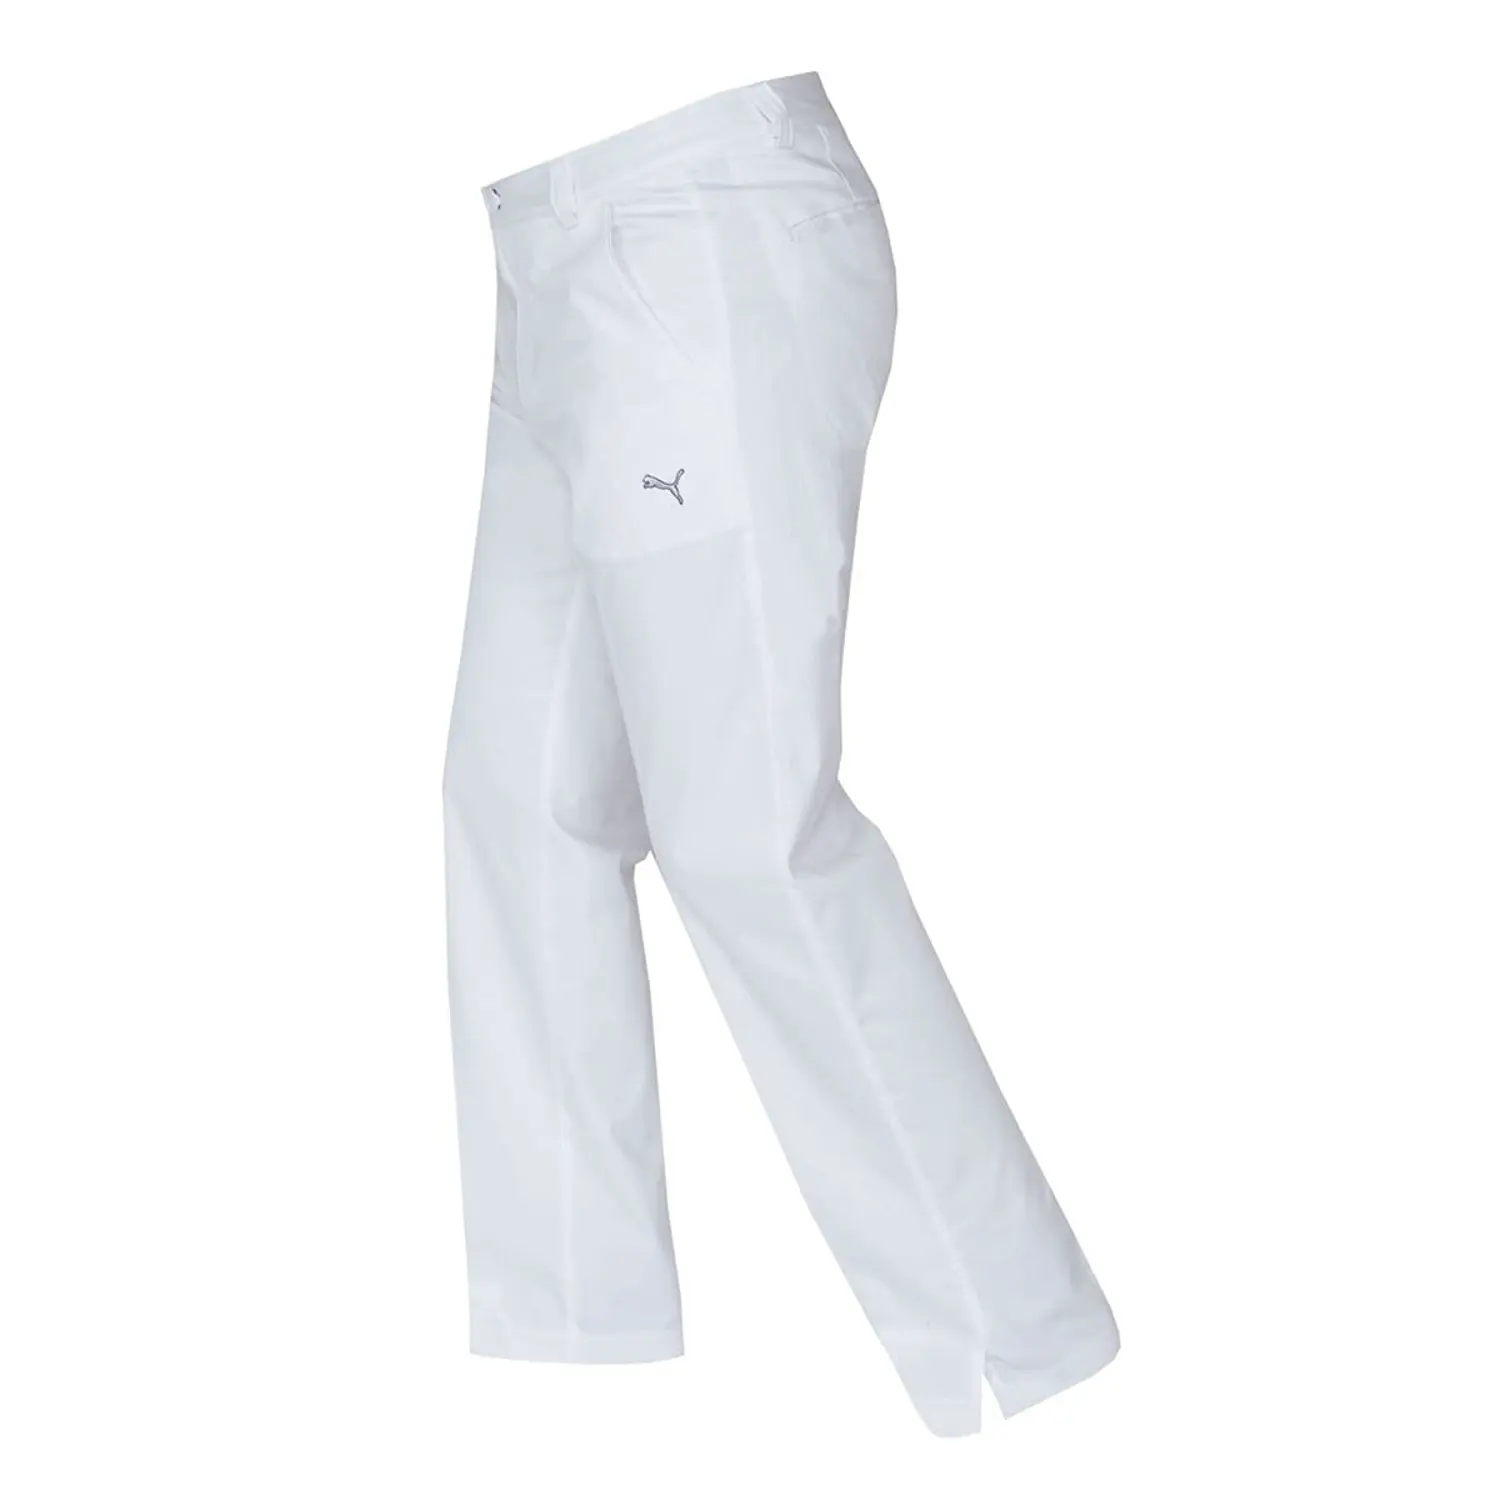 puma white golf pants - 52% OFF 